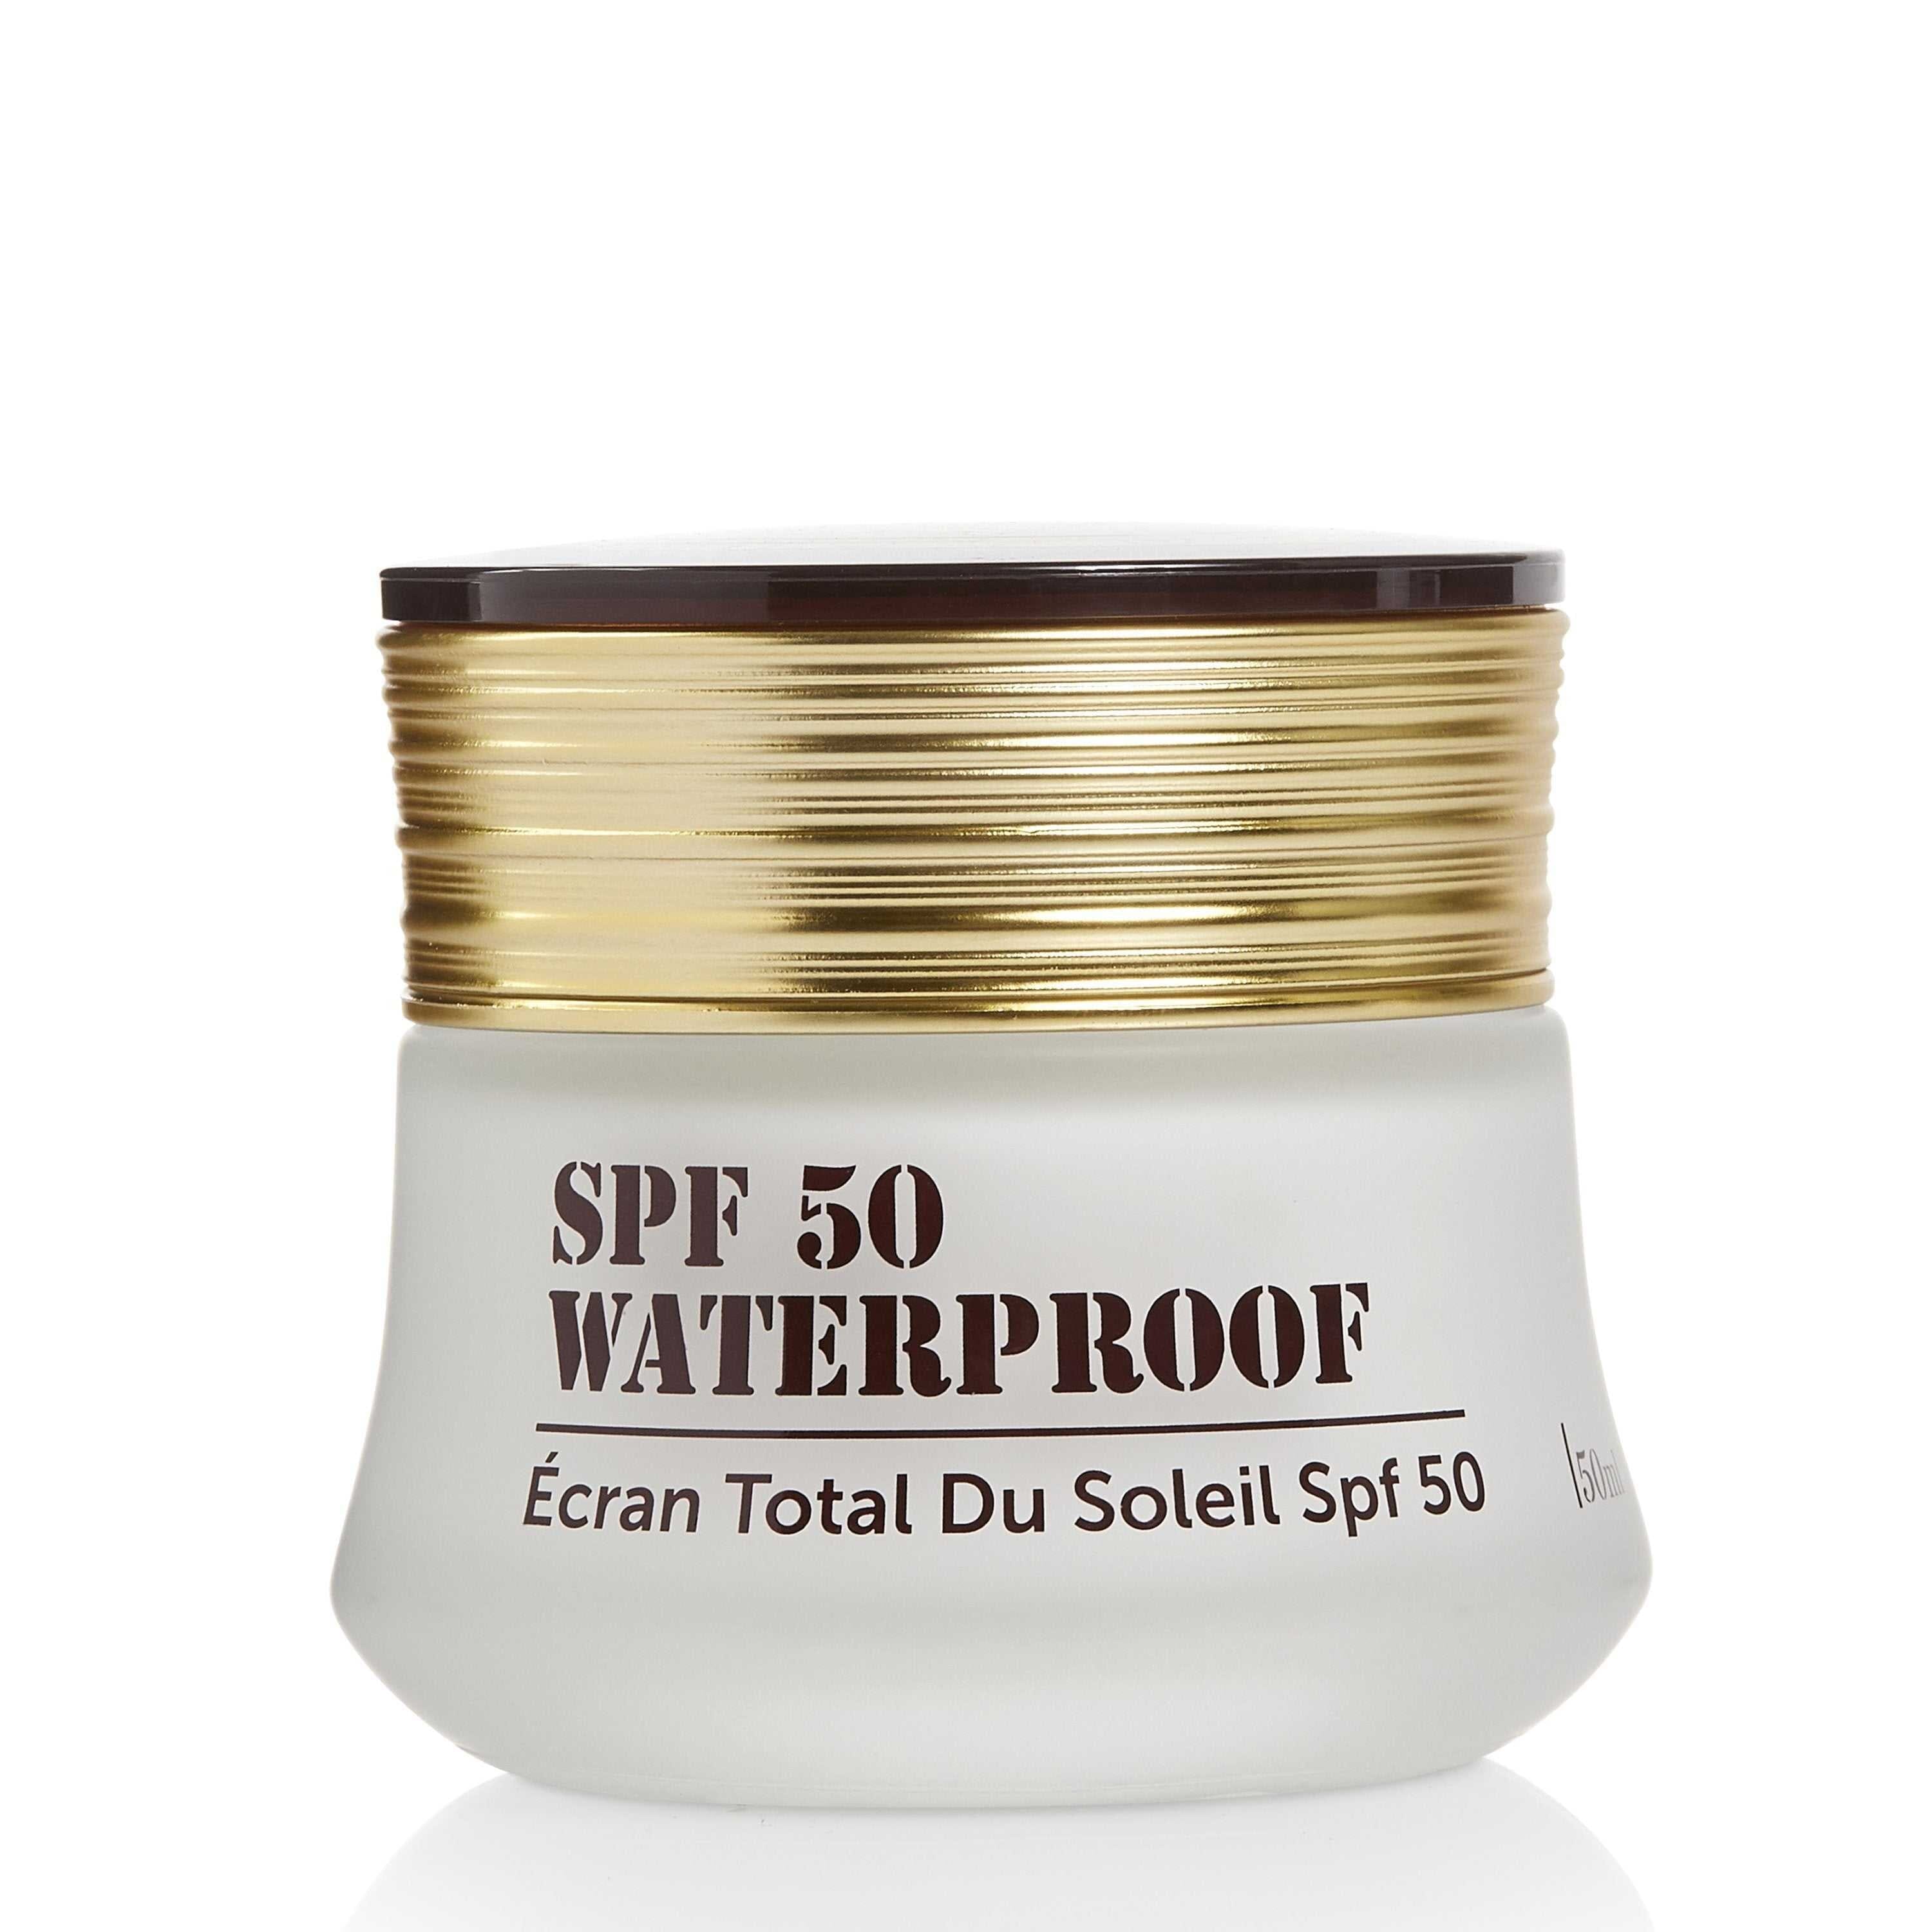 SPF 50 Waterproof Lotion Skin Care Shore Magic 